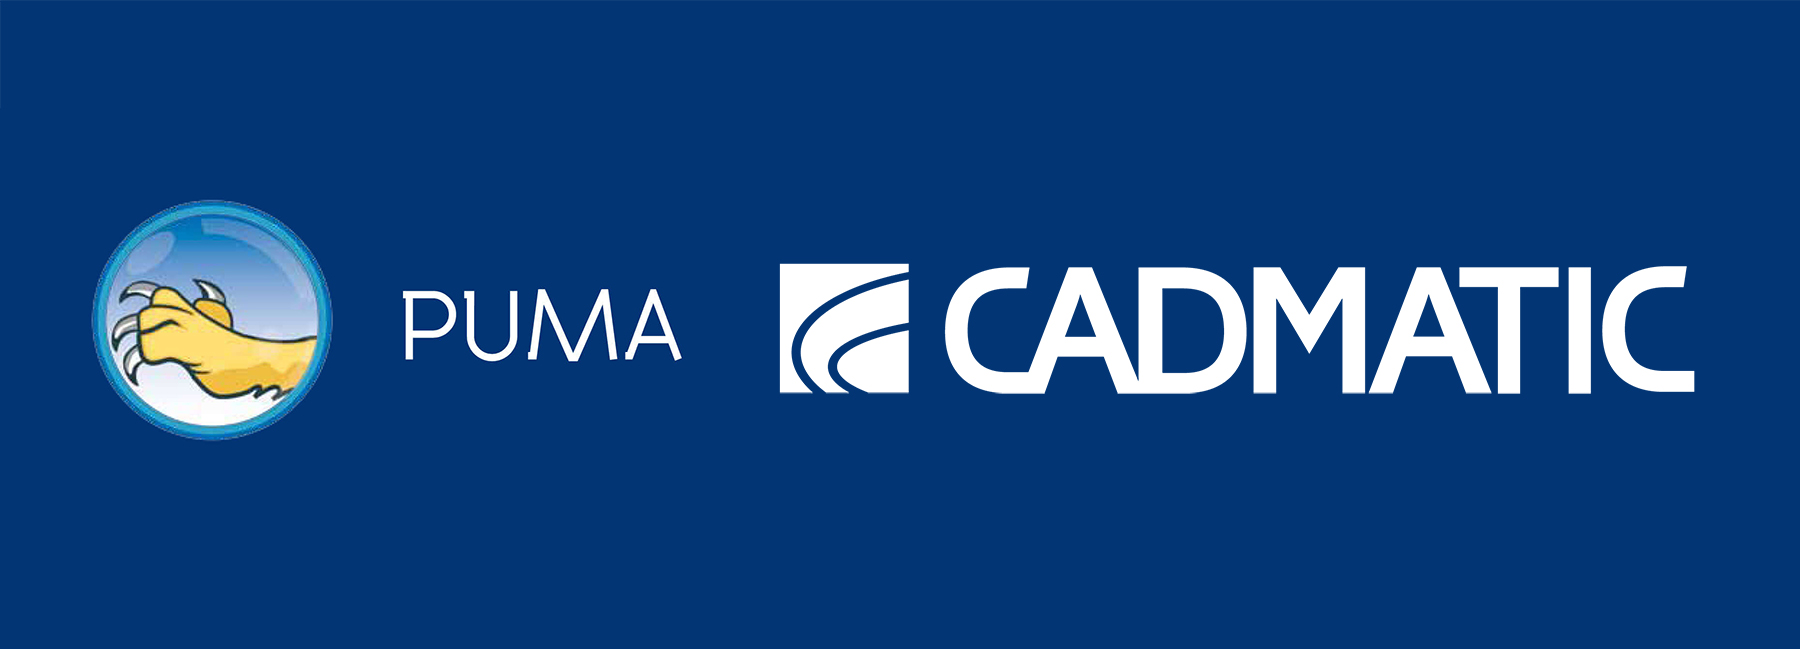 Puma and Cadmatic -logos